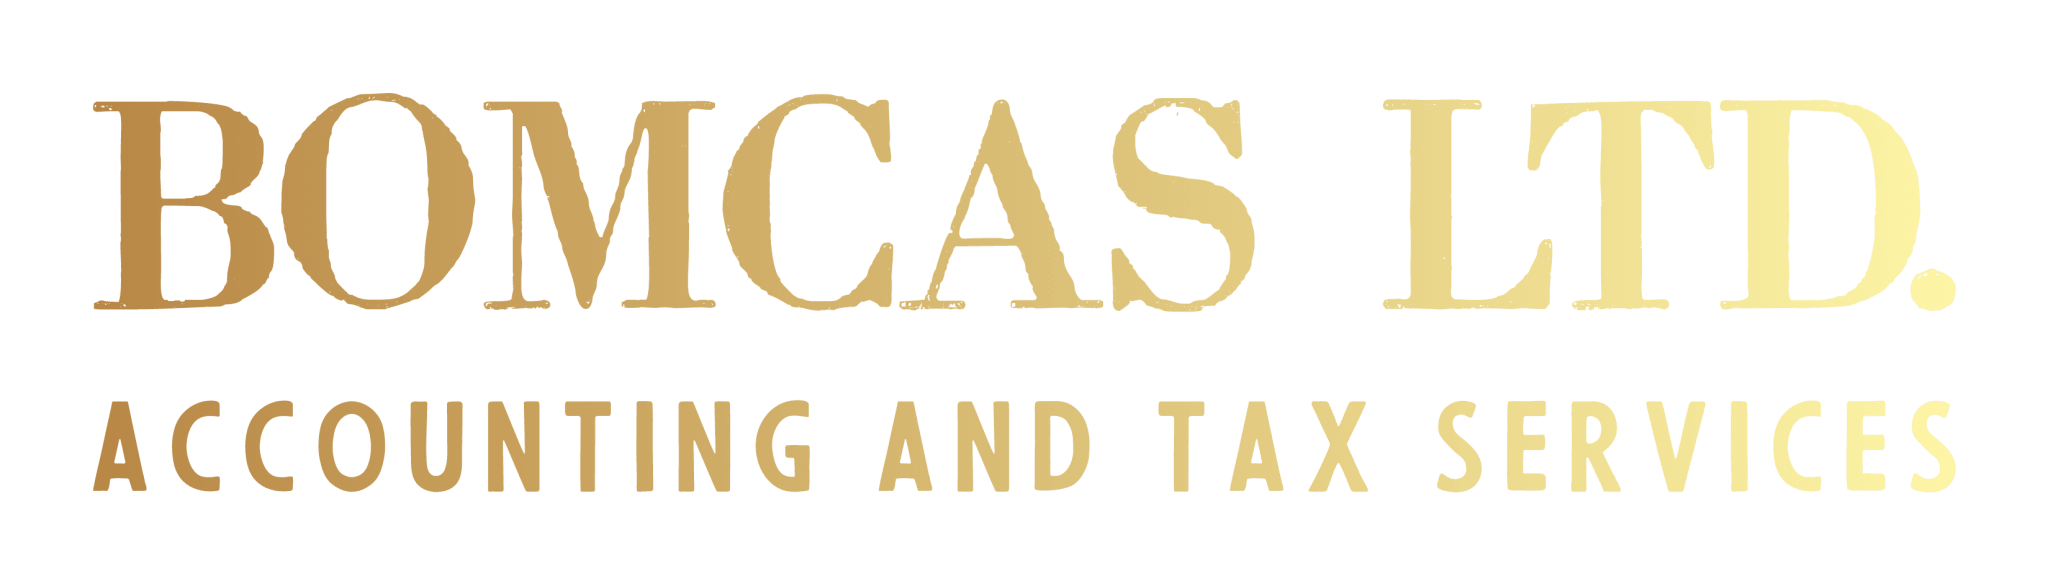 Tax Alberta Bomcas Canada Accounting